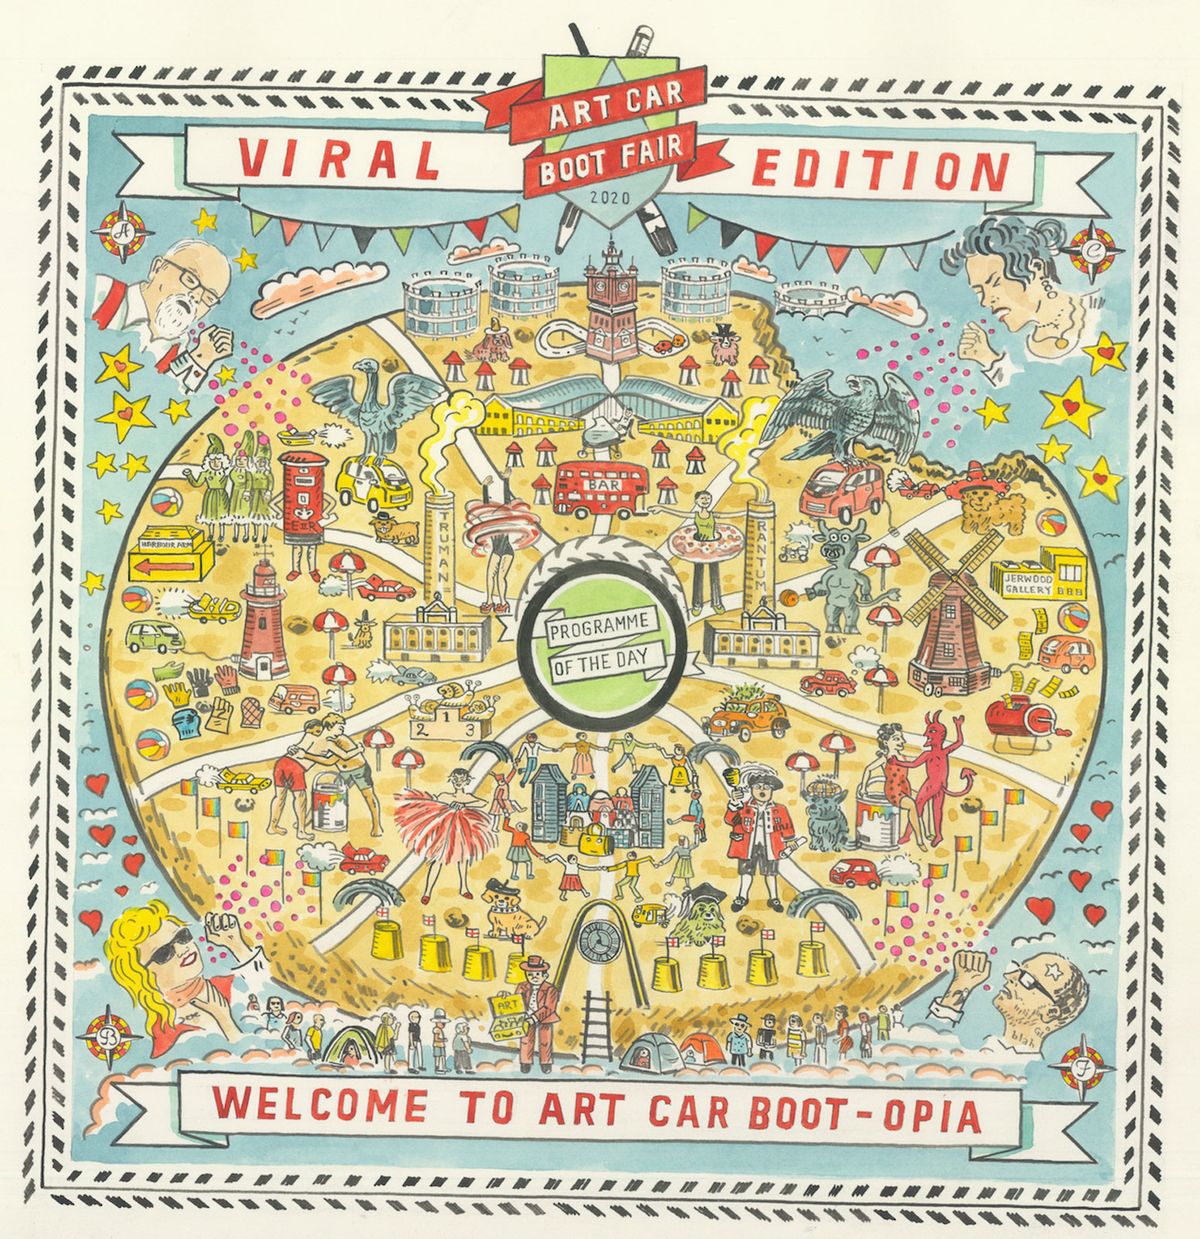 Adam Dant's Art Car Bootopia (2020) Courtesy of the Art Car Boot Fair